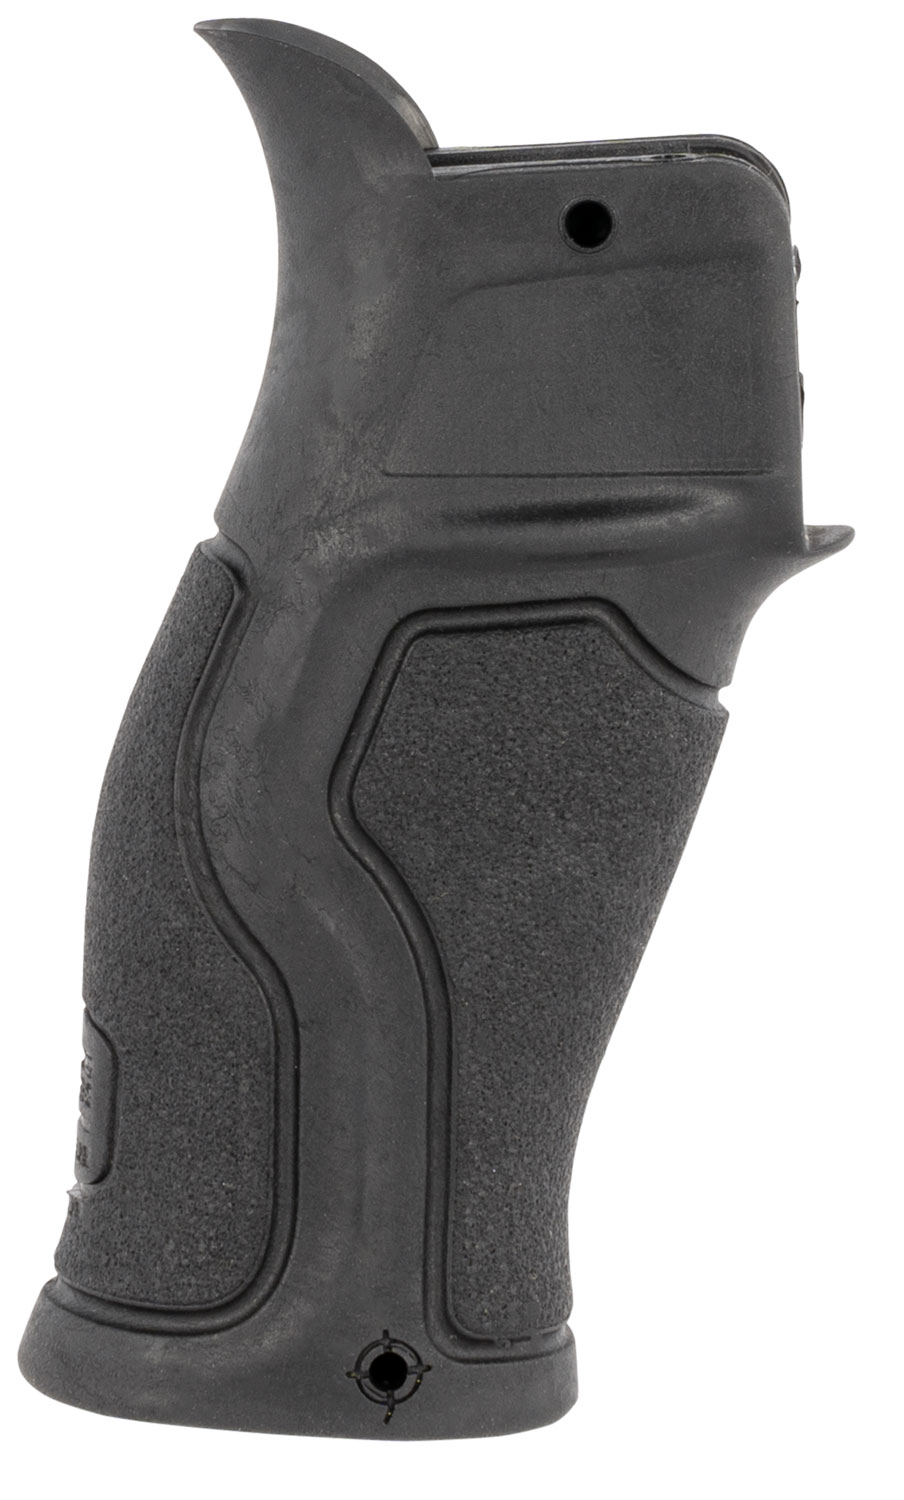 FAB Defense FX-GRADUSB Gradus Ergonomic Pistol Grip 15 Degree Black Polymer with Rubber Overmold for AR-15, AR-10, M4, M16